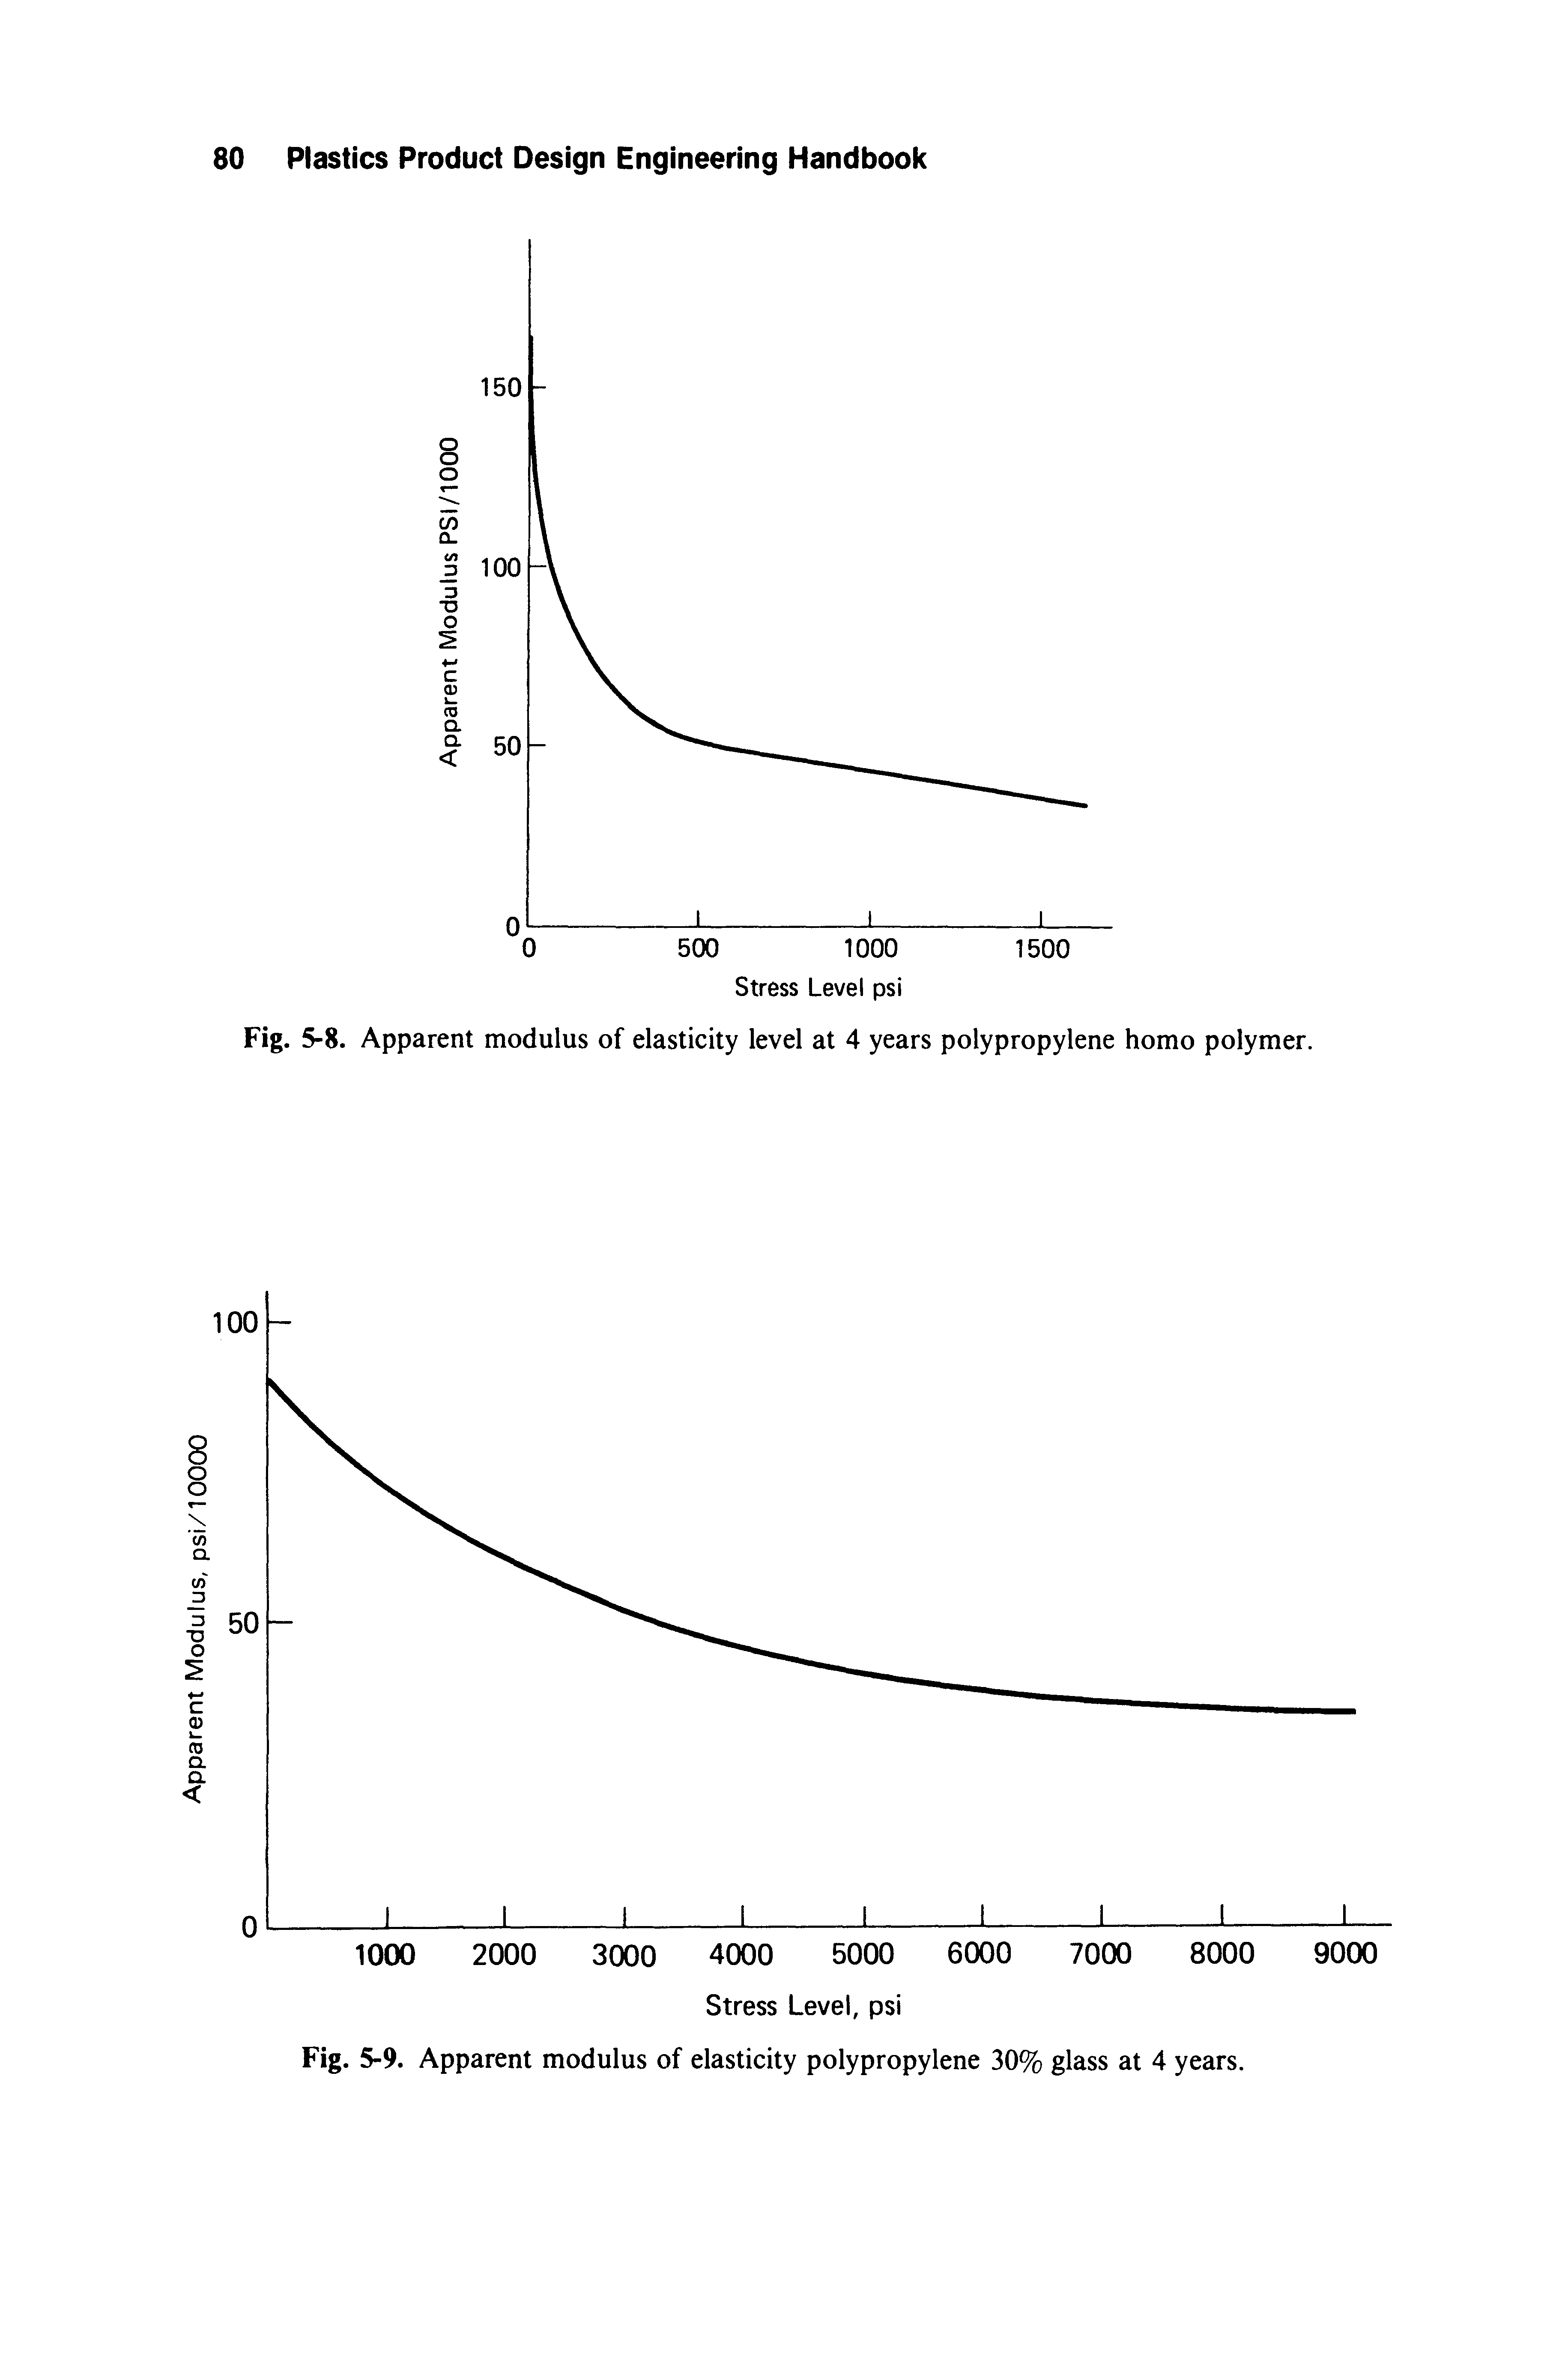 Fig. 5-8. Apparent modulus of elasticity level at 4 years polypropylene homo polymer.